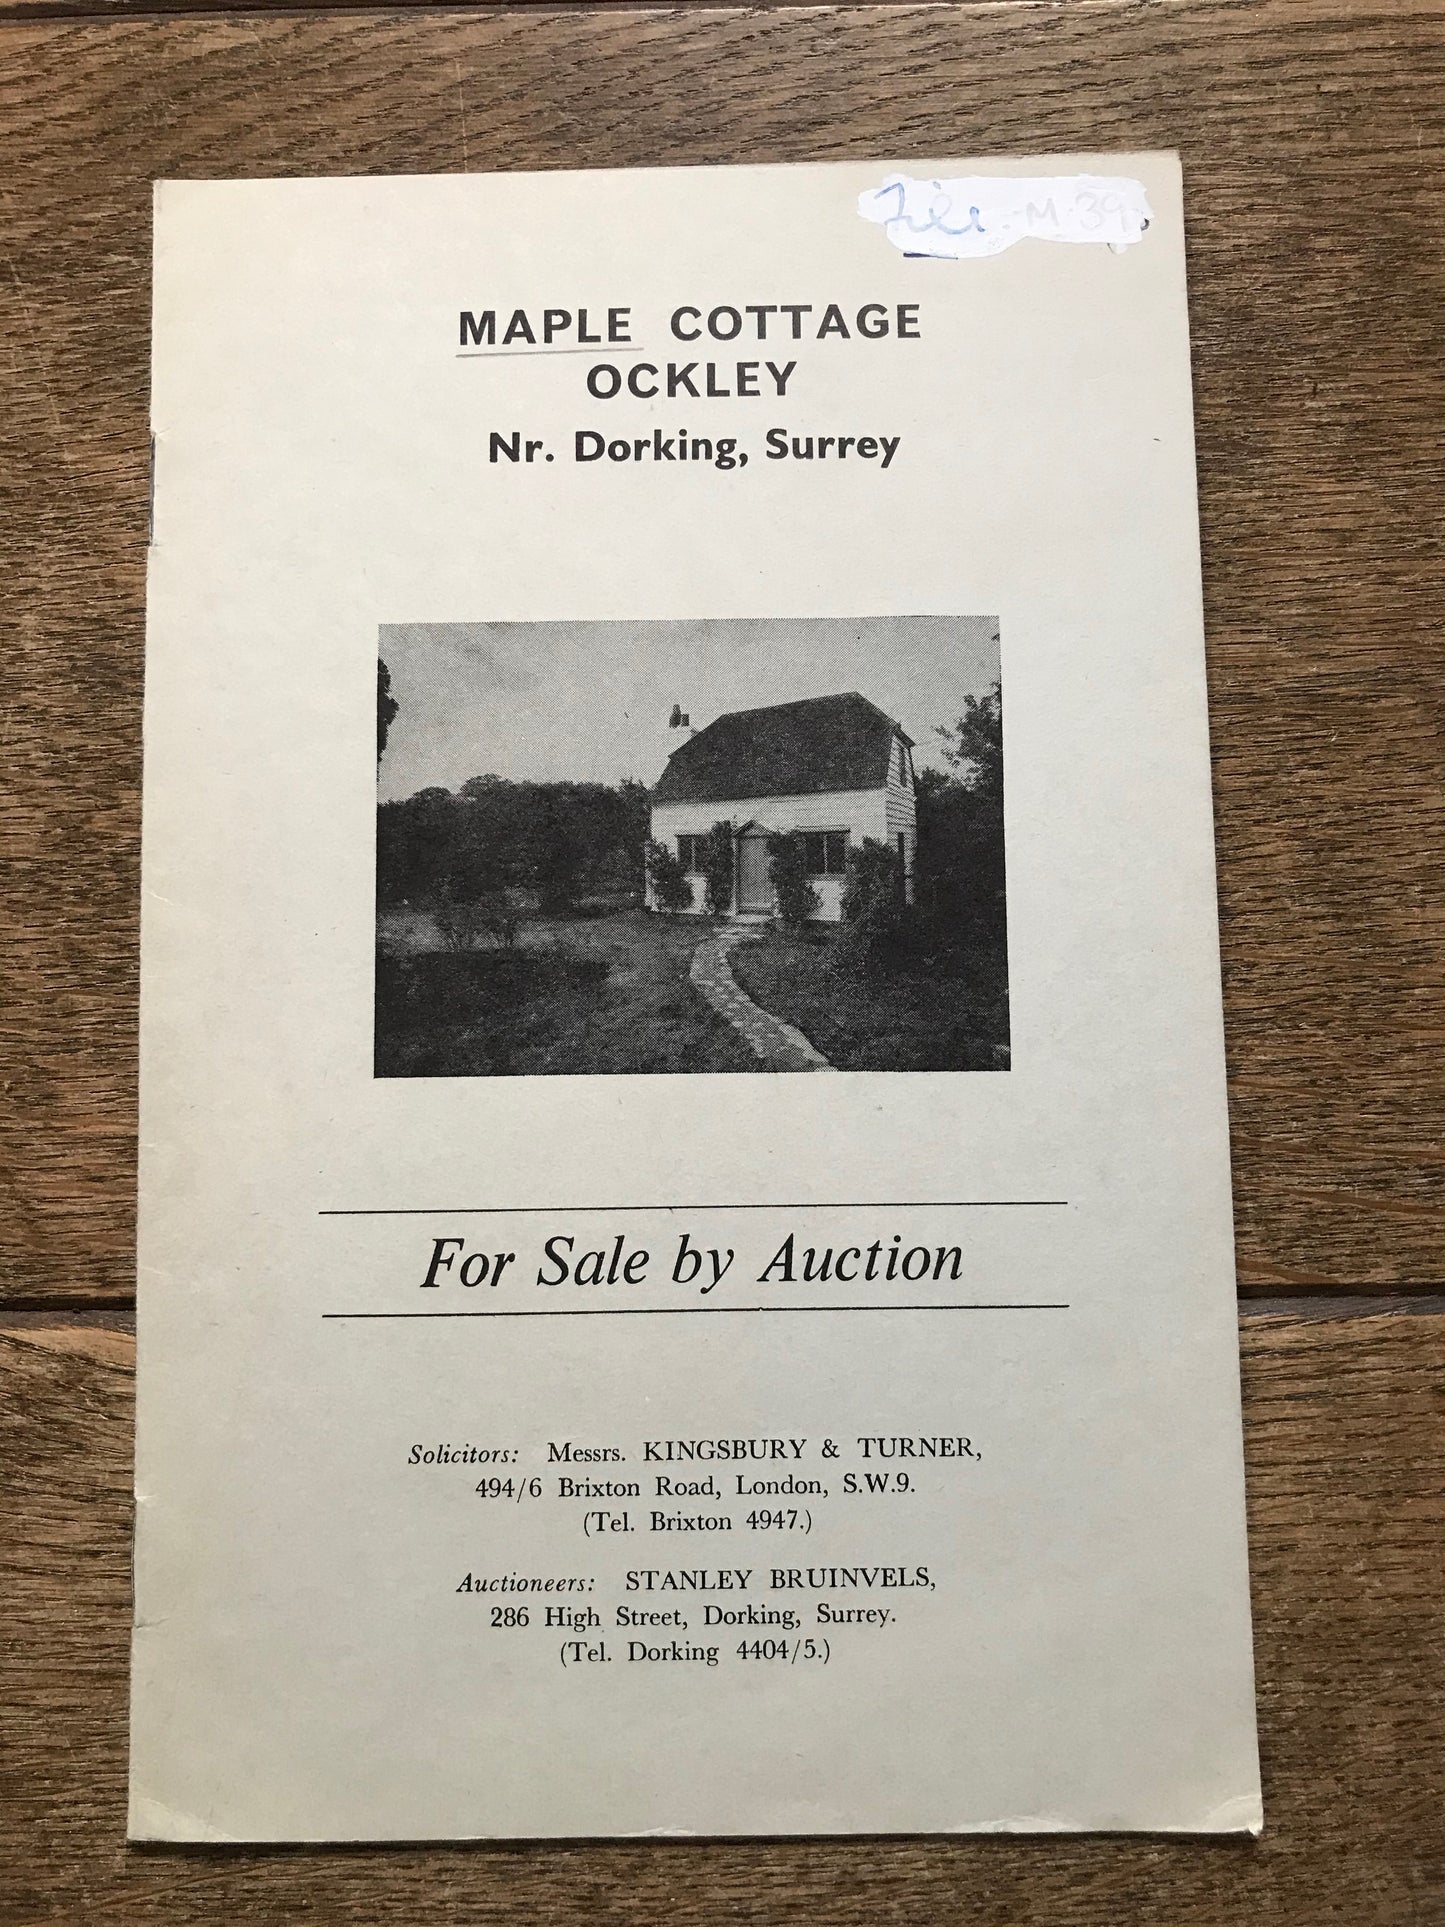 Maple Cottage, Ockley.  1965 Sales Particulars